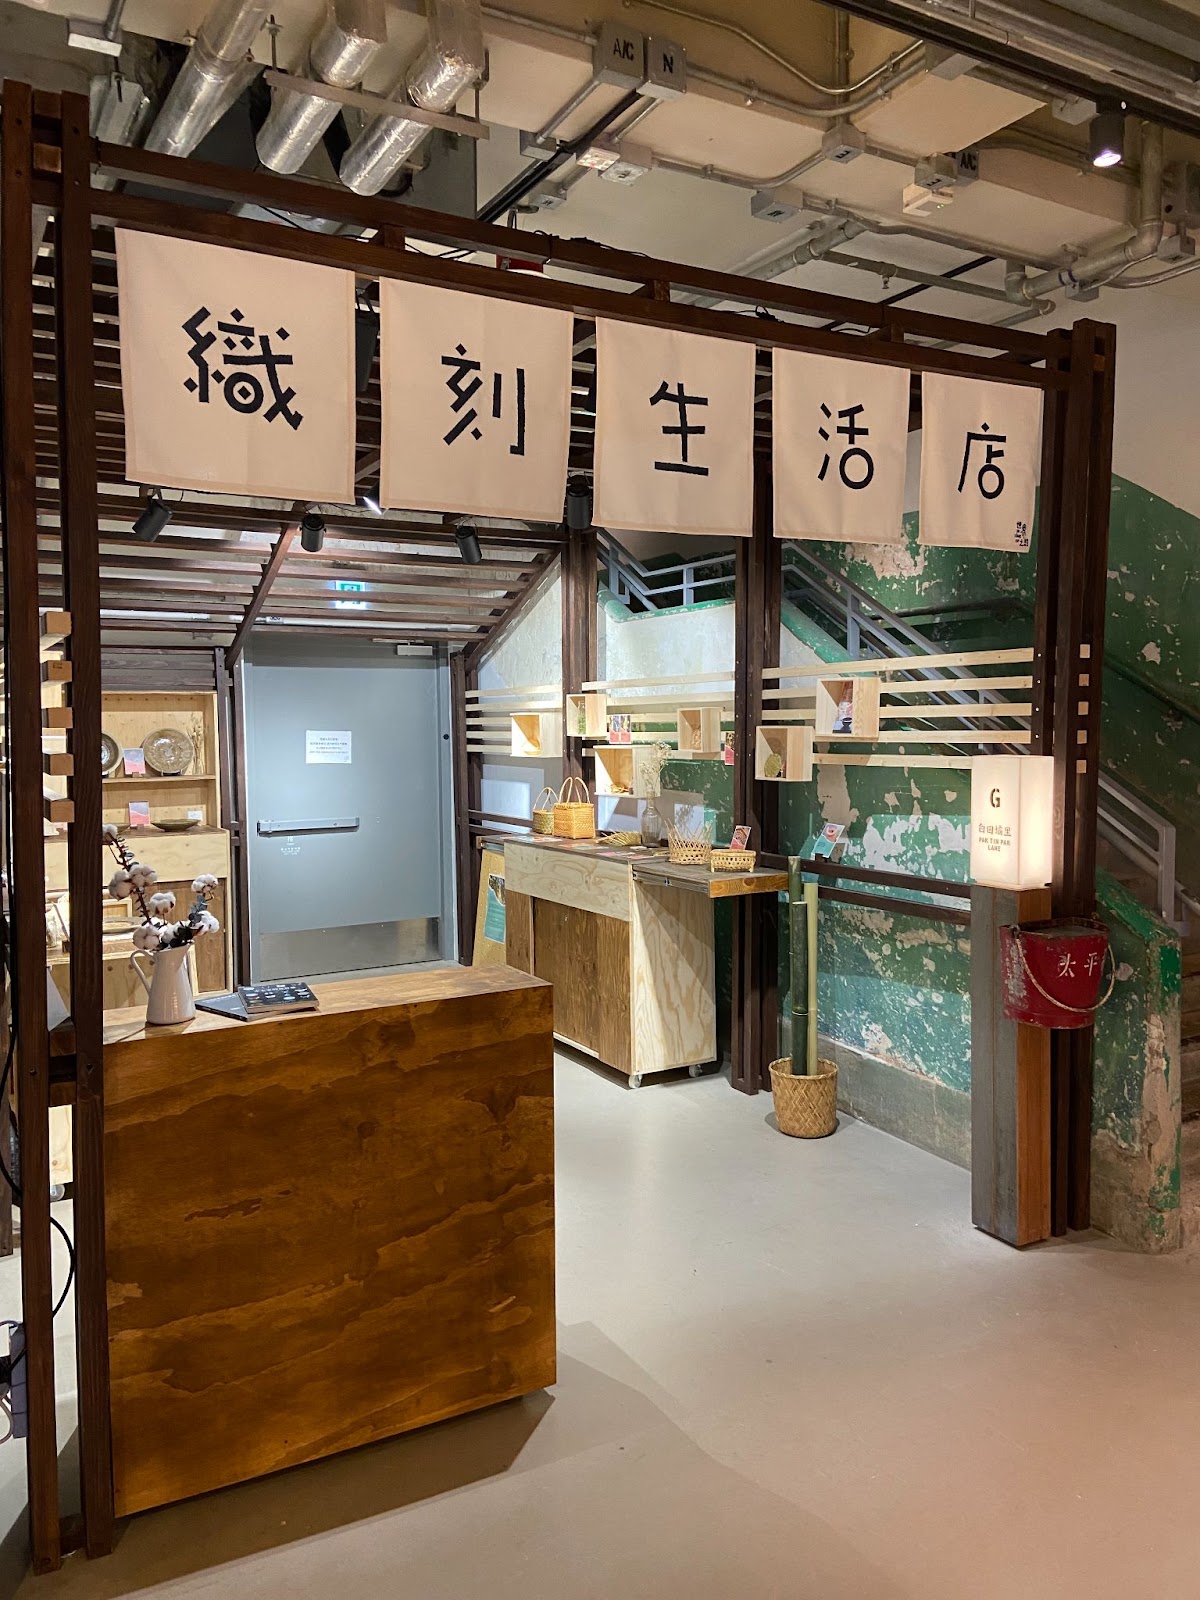 Echo Asia 可持續發展 
位於南豐紗廠的「織刻生活店」為首間生活故事選物店，專門售賣能呈現社區故事的創作產品。「織刻生活店」的店面及展示架均以紗廠過去用作展覽的材料升級再造成，店中的作品展示架則由香港塑膠回收團體Gaau1 Up 以香港塑膠升級再造。